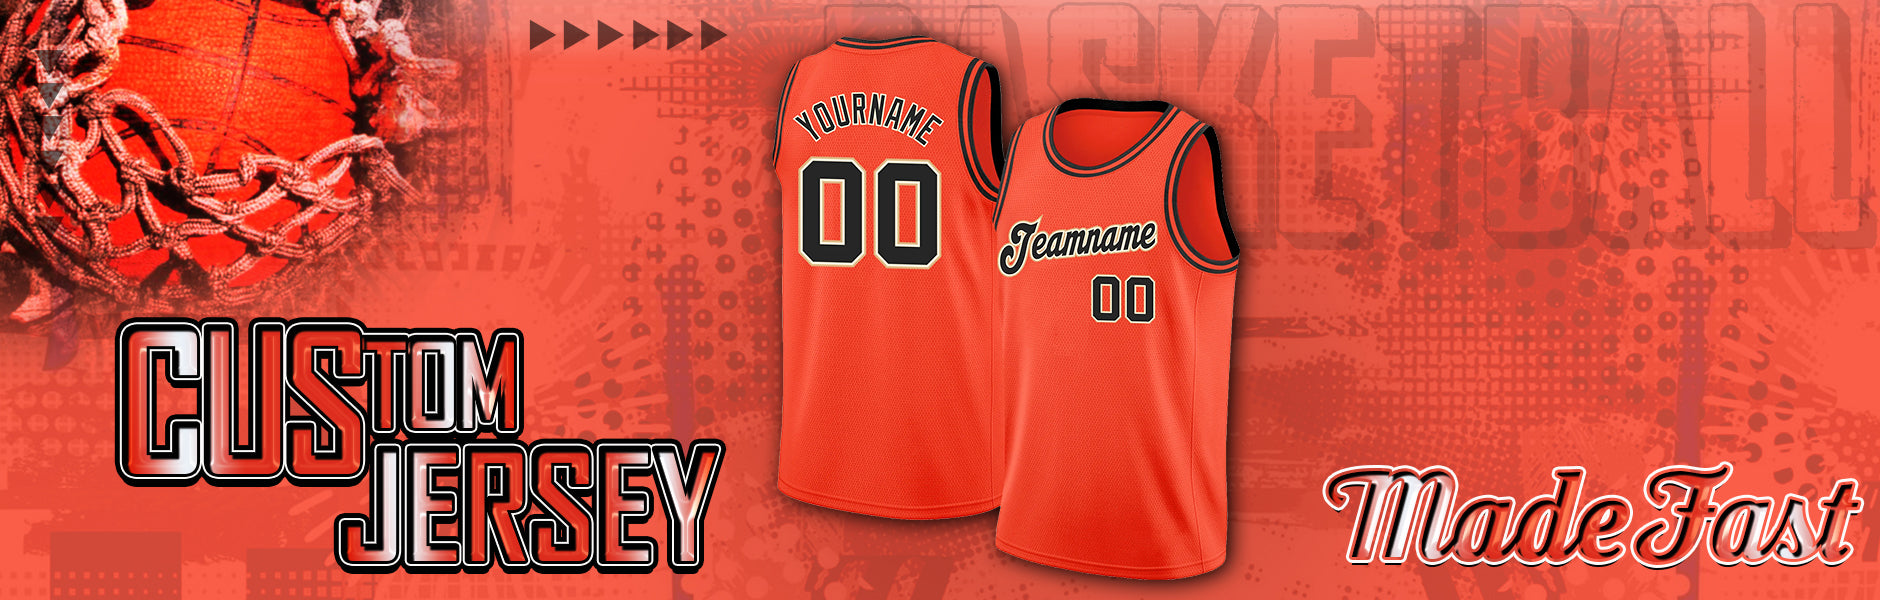 Basketball Jersey Orange - TrendzCustomz